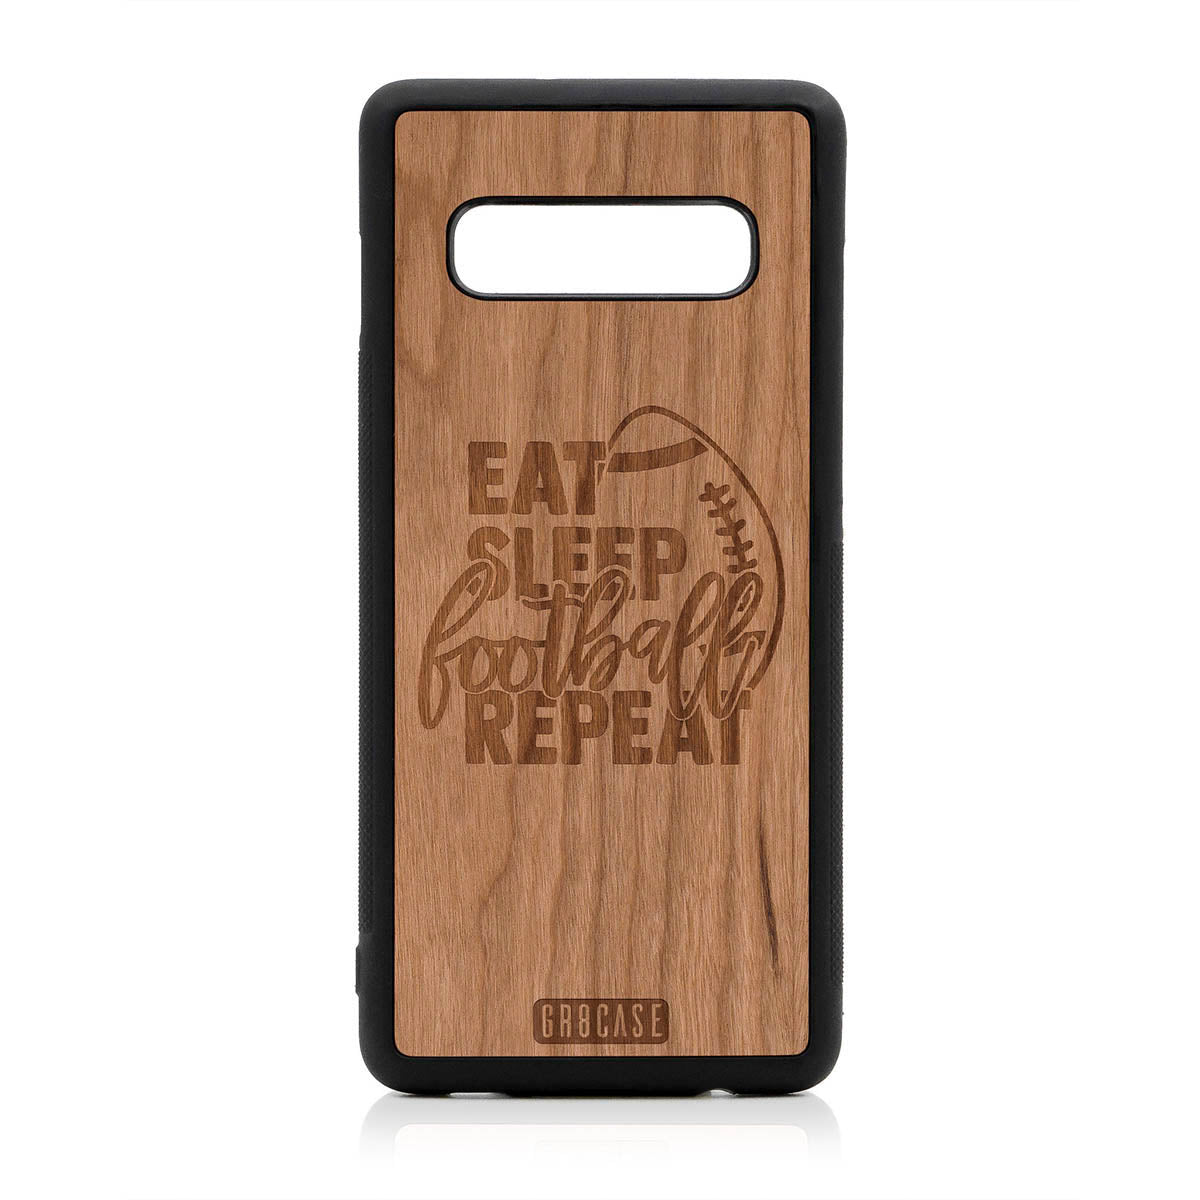 Eat Sleep Football Repeat Design Wood Case For Samsung Galaxy S10 Plus